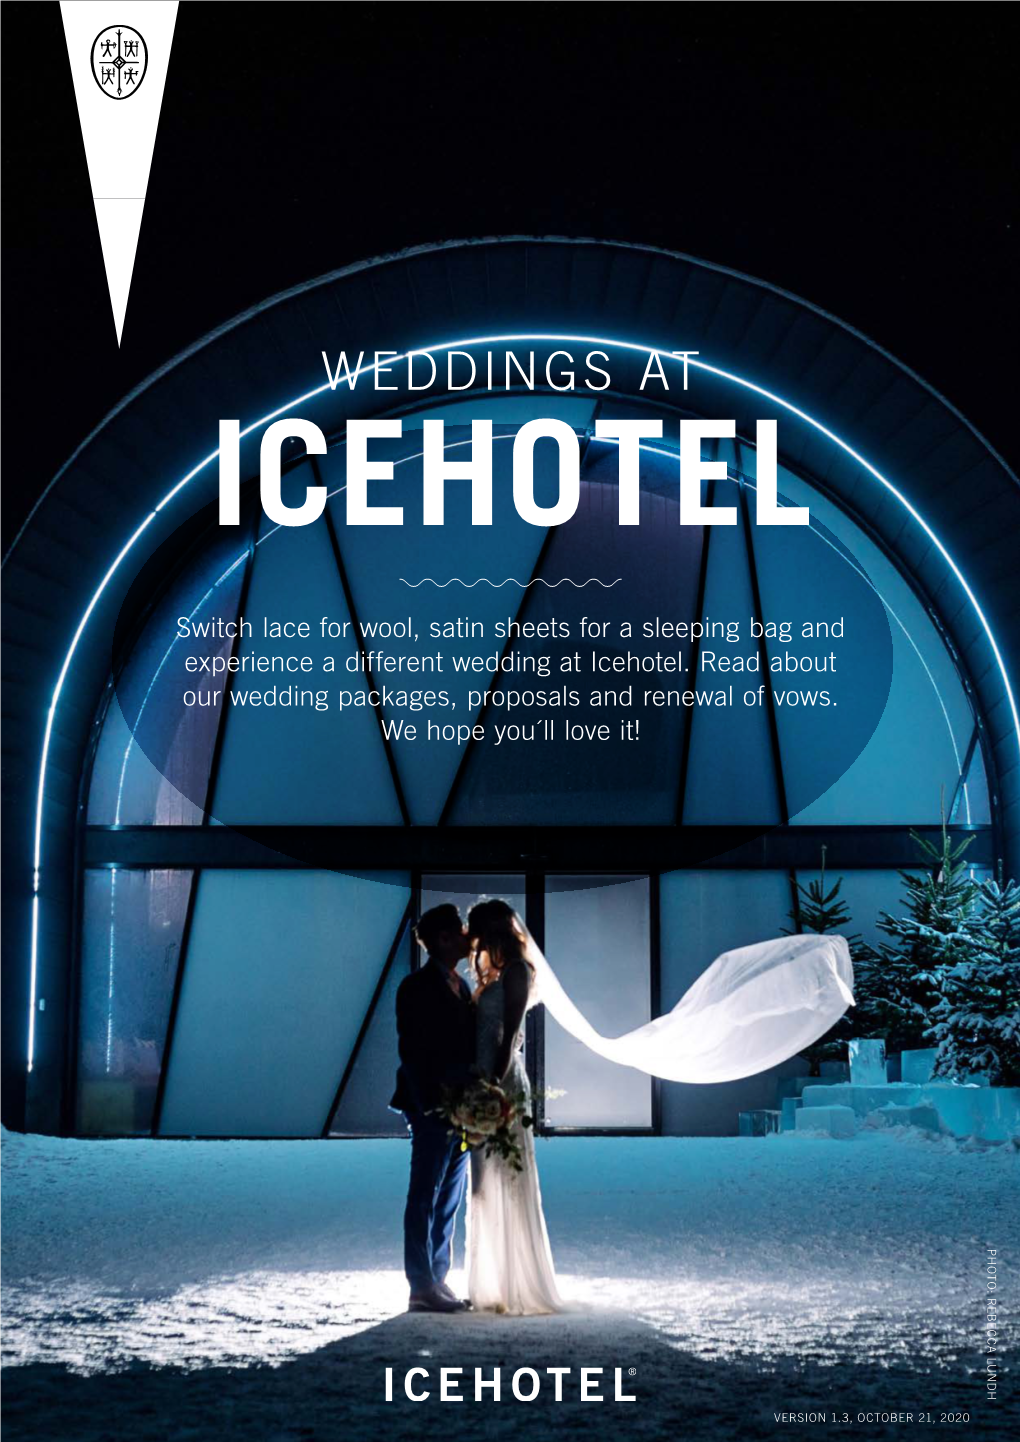 Weddings at Icehotel